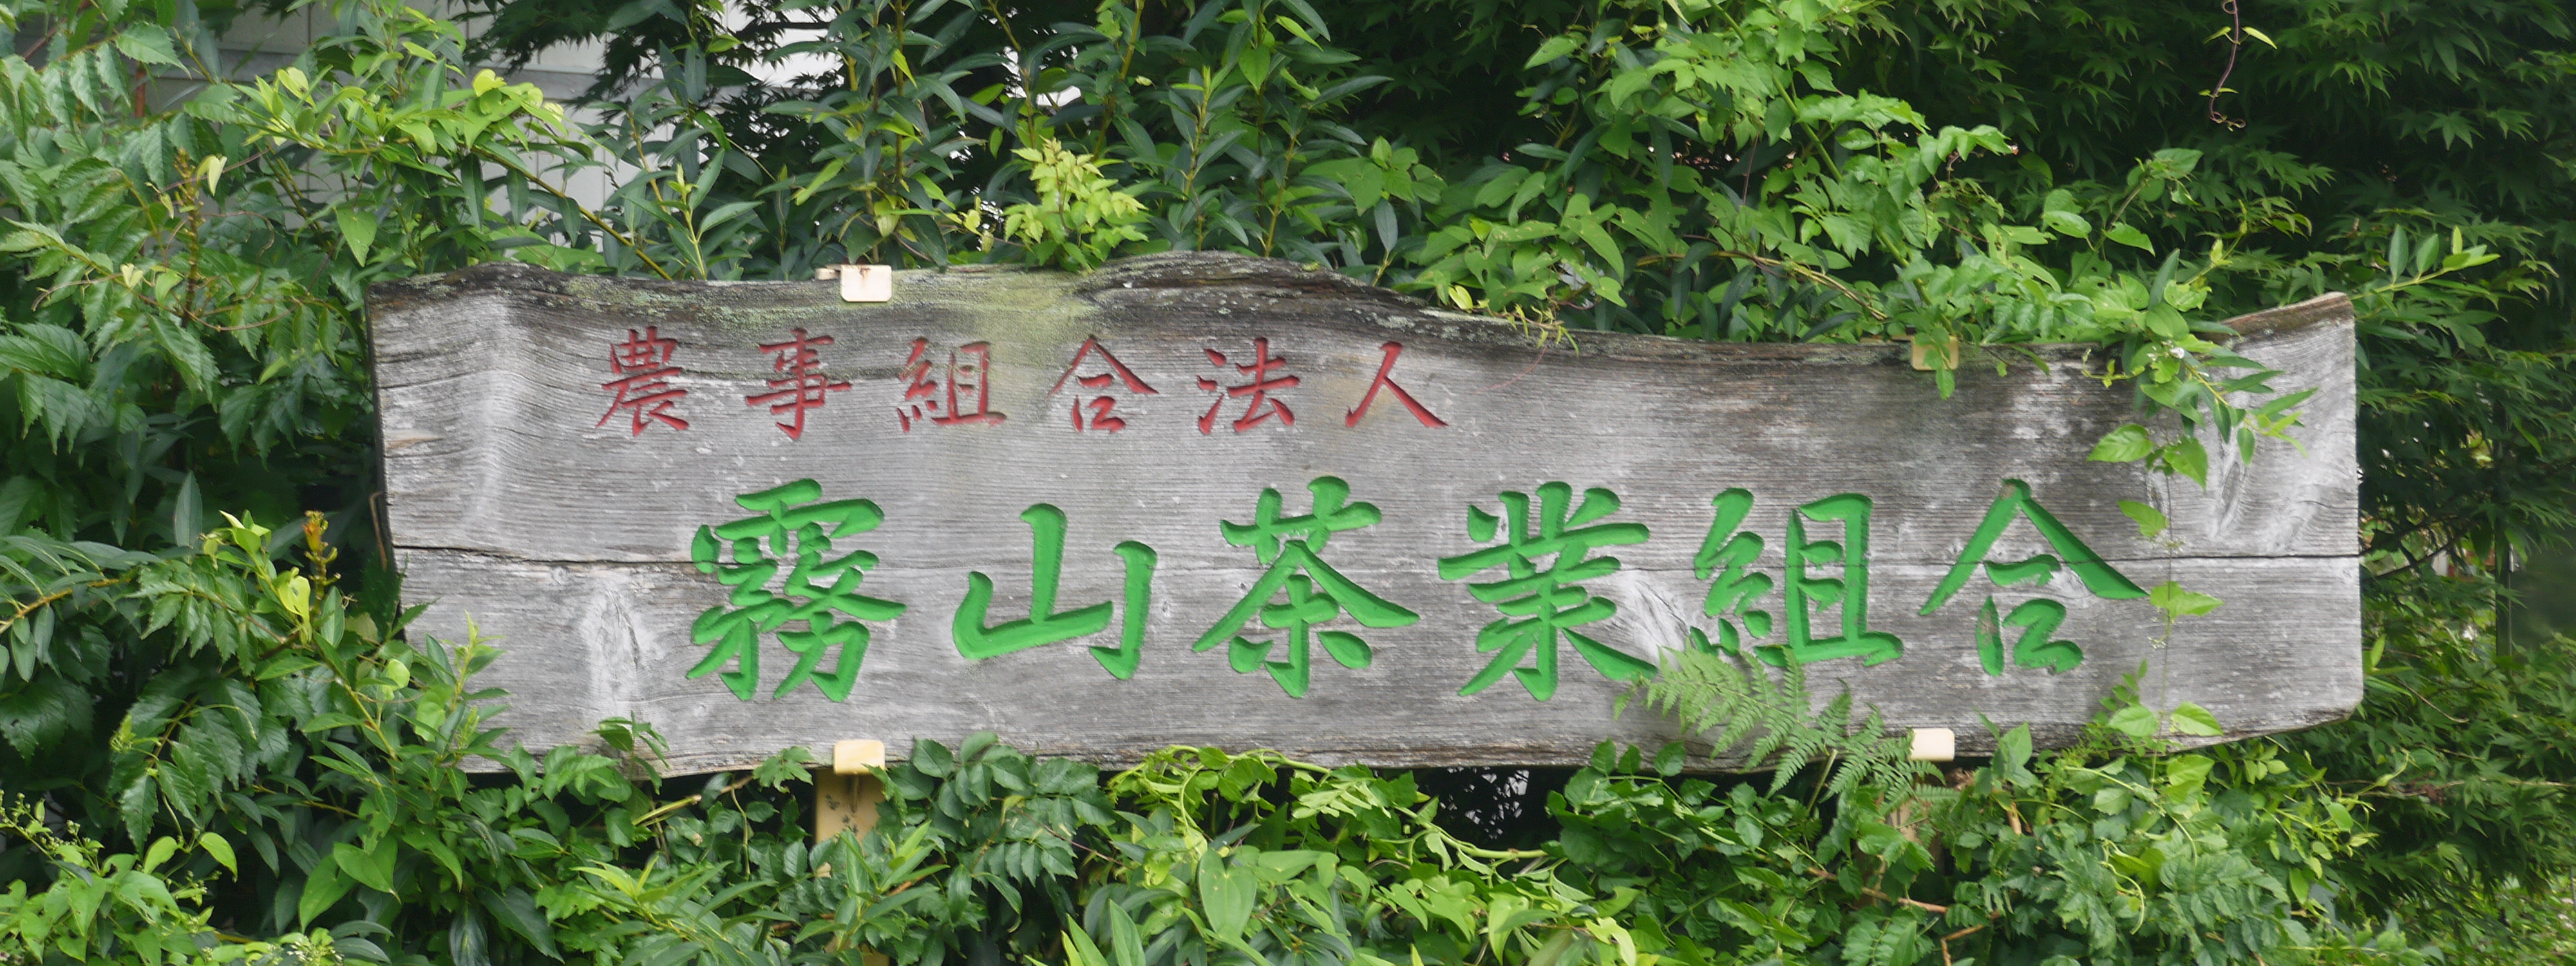 Kiriyama Tea Farm 霧山茶業組合